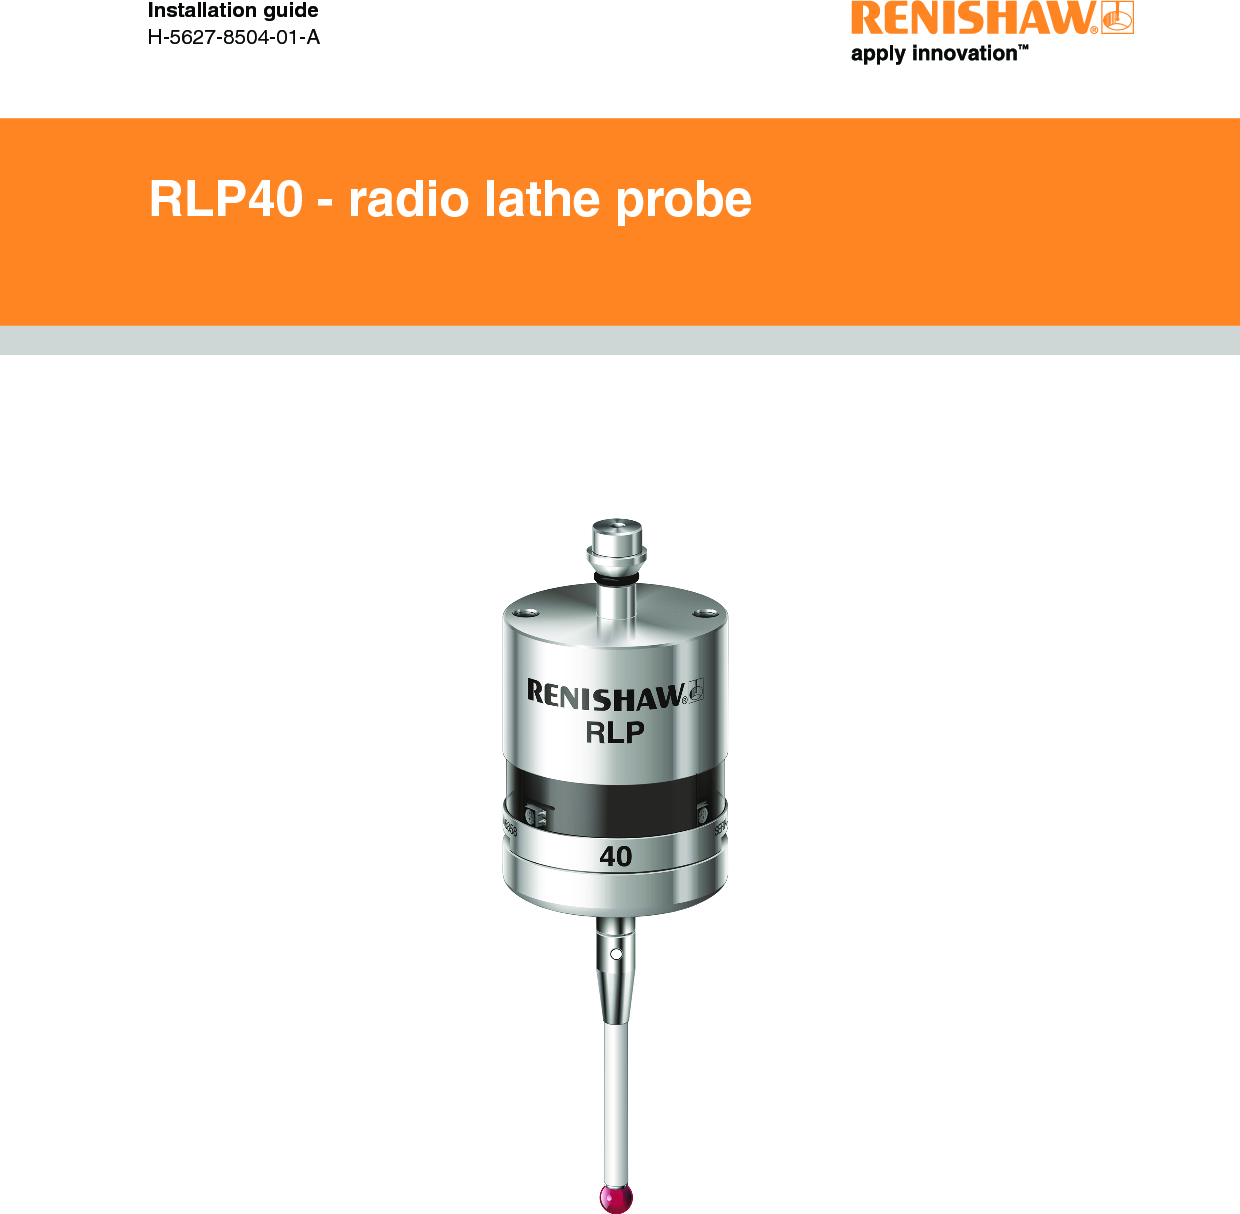 RLP40 - radio lathe probeInstallation guideH-5627-8504-01-A